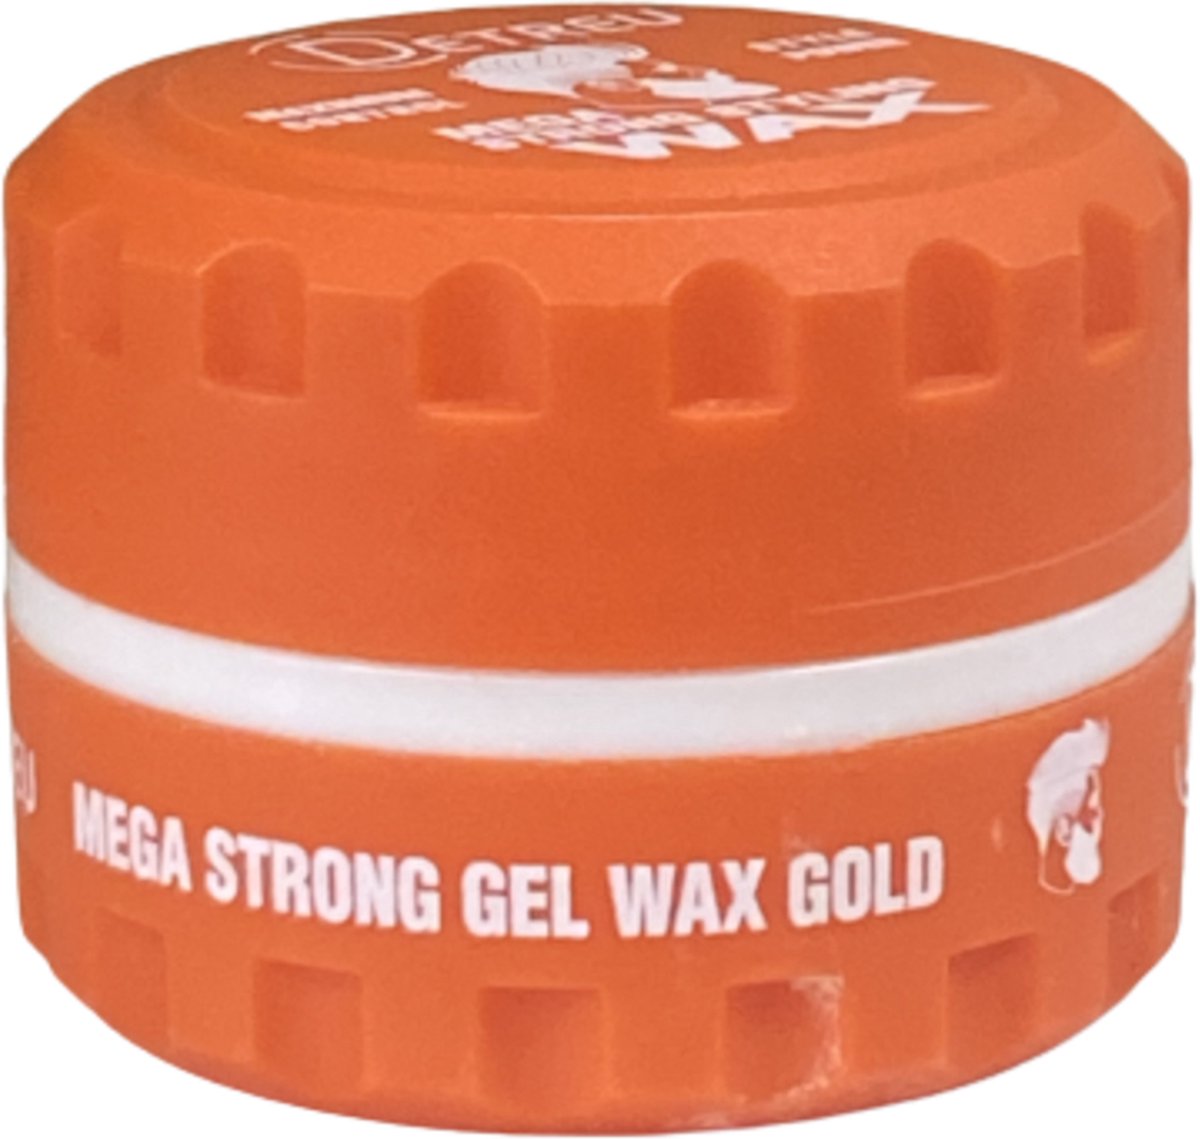 Detreu Mega Strong Styling Gel Wax Gold 140 ml